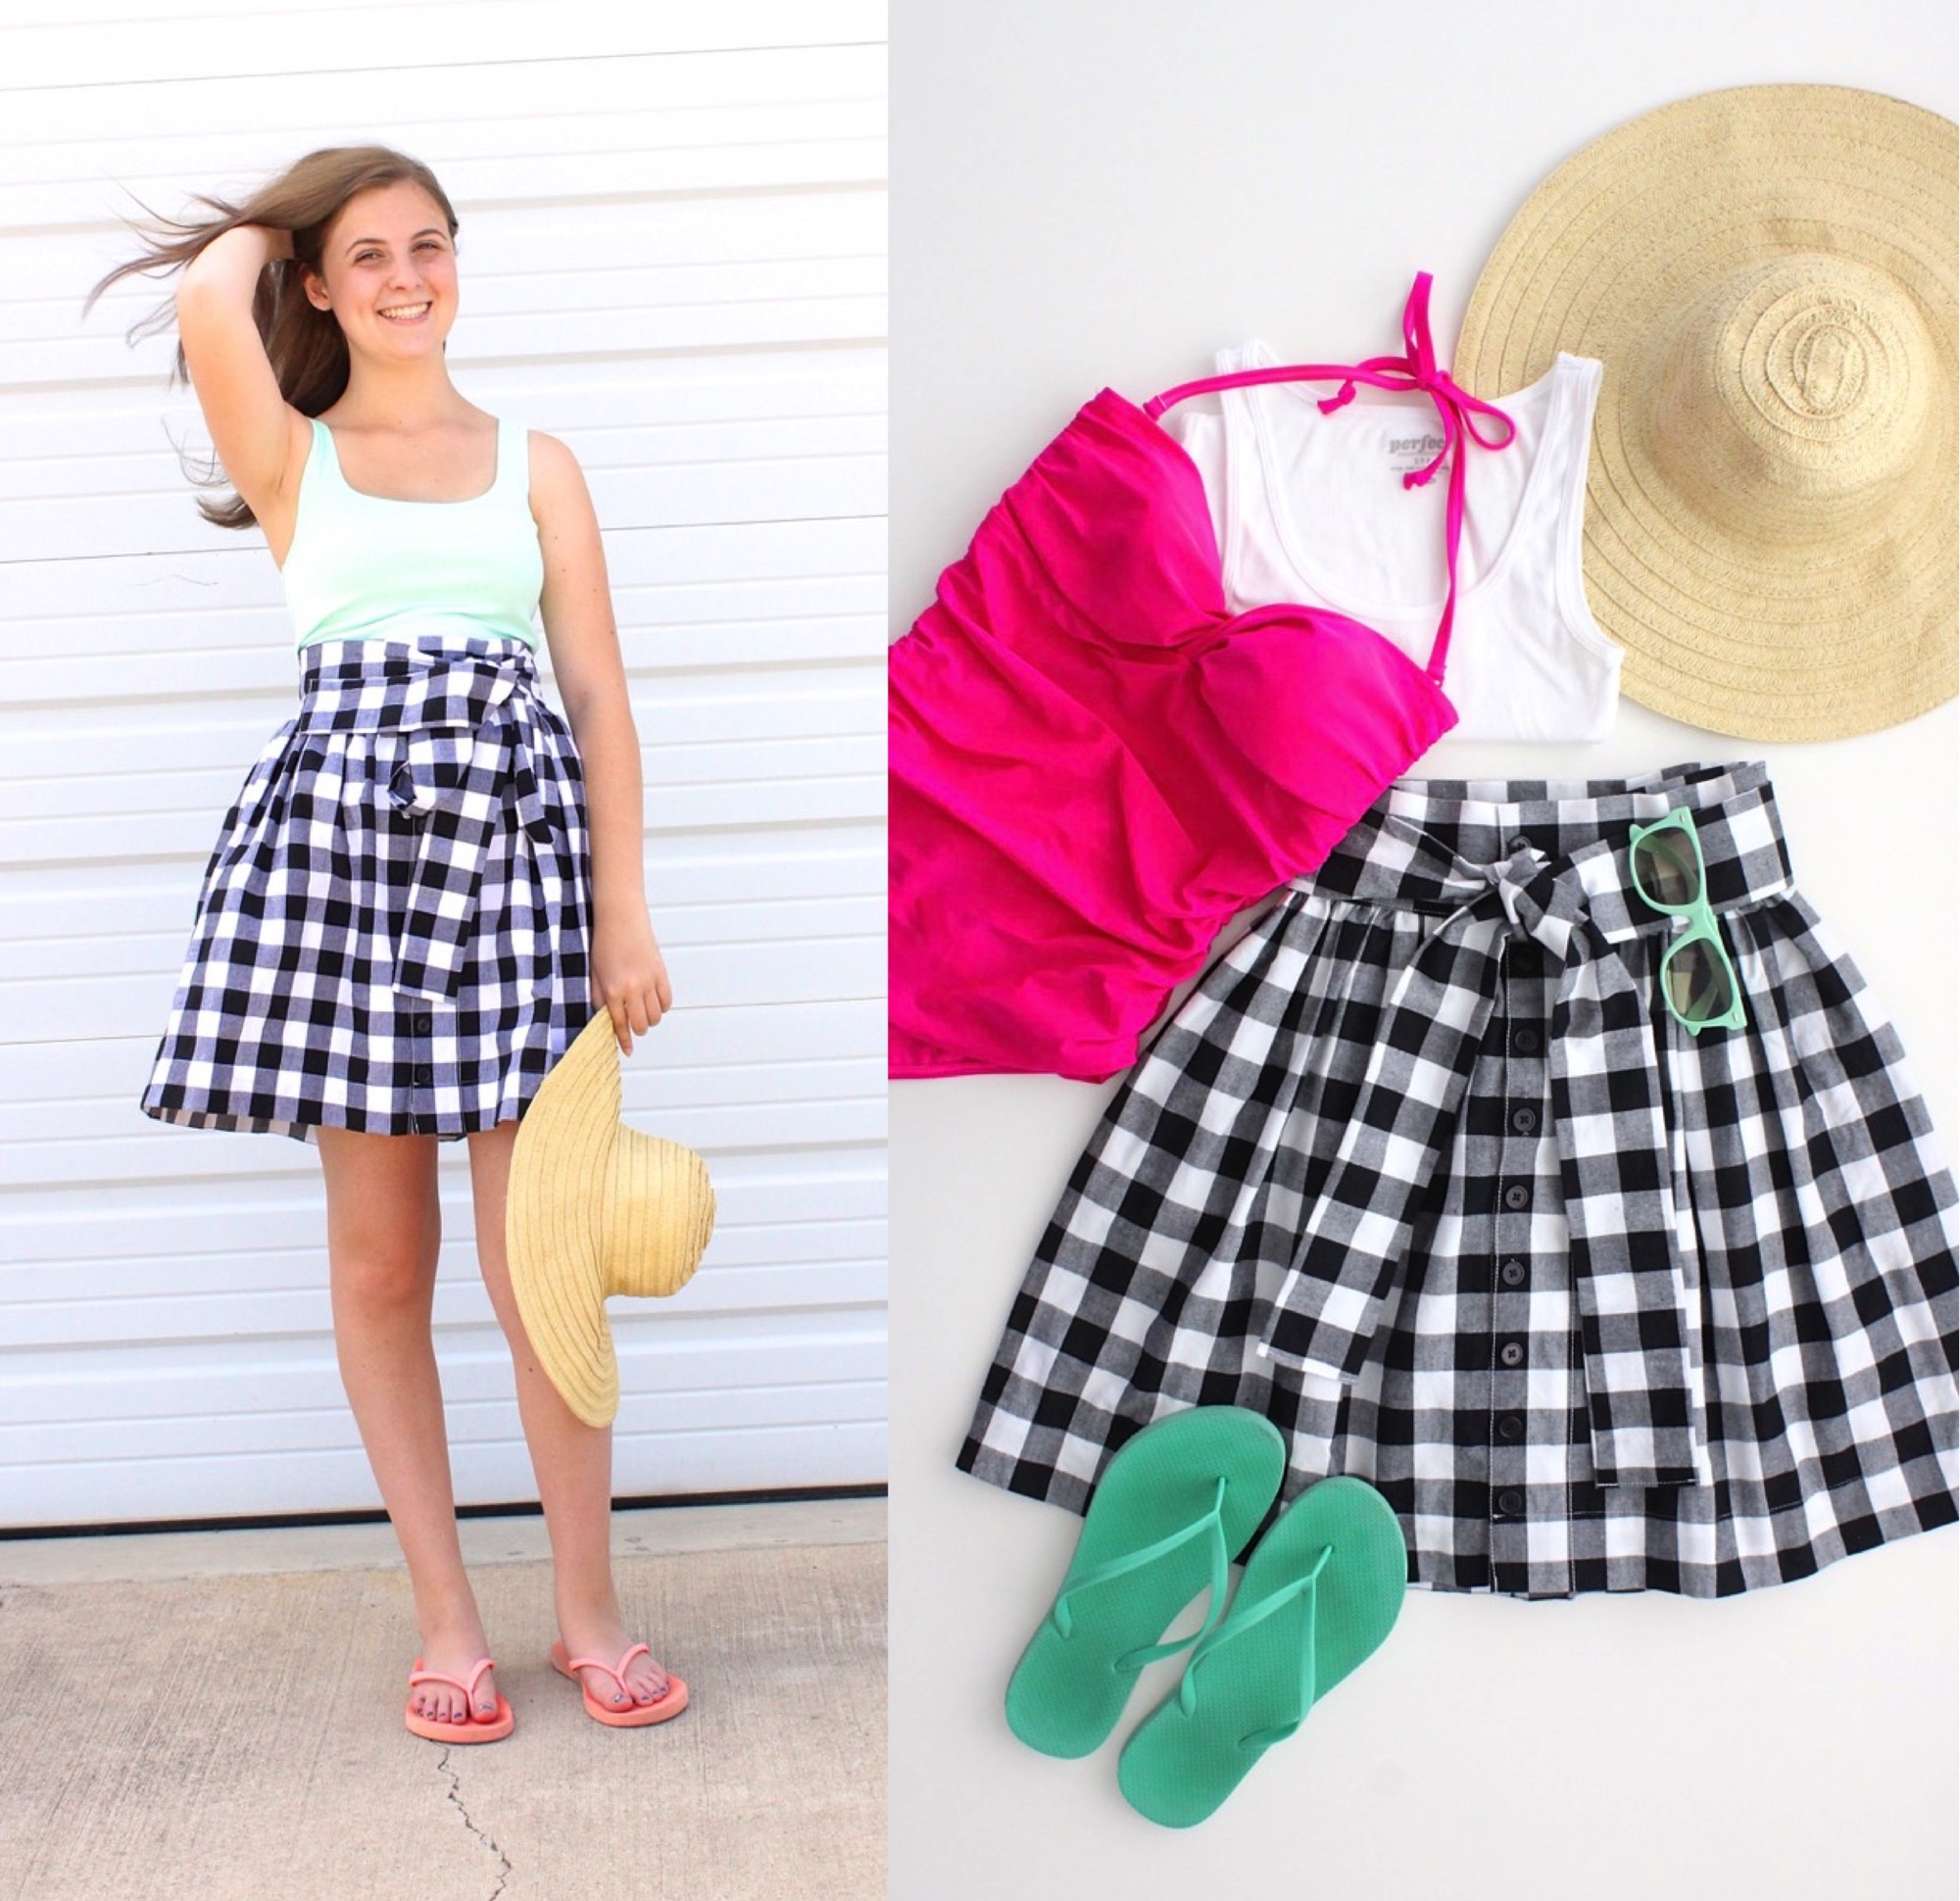 15 Women's Skirt Patterns Perfect for Summer